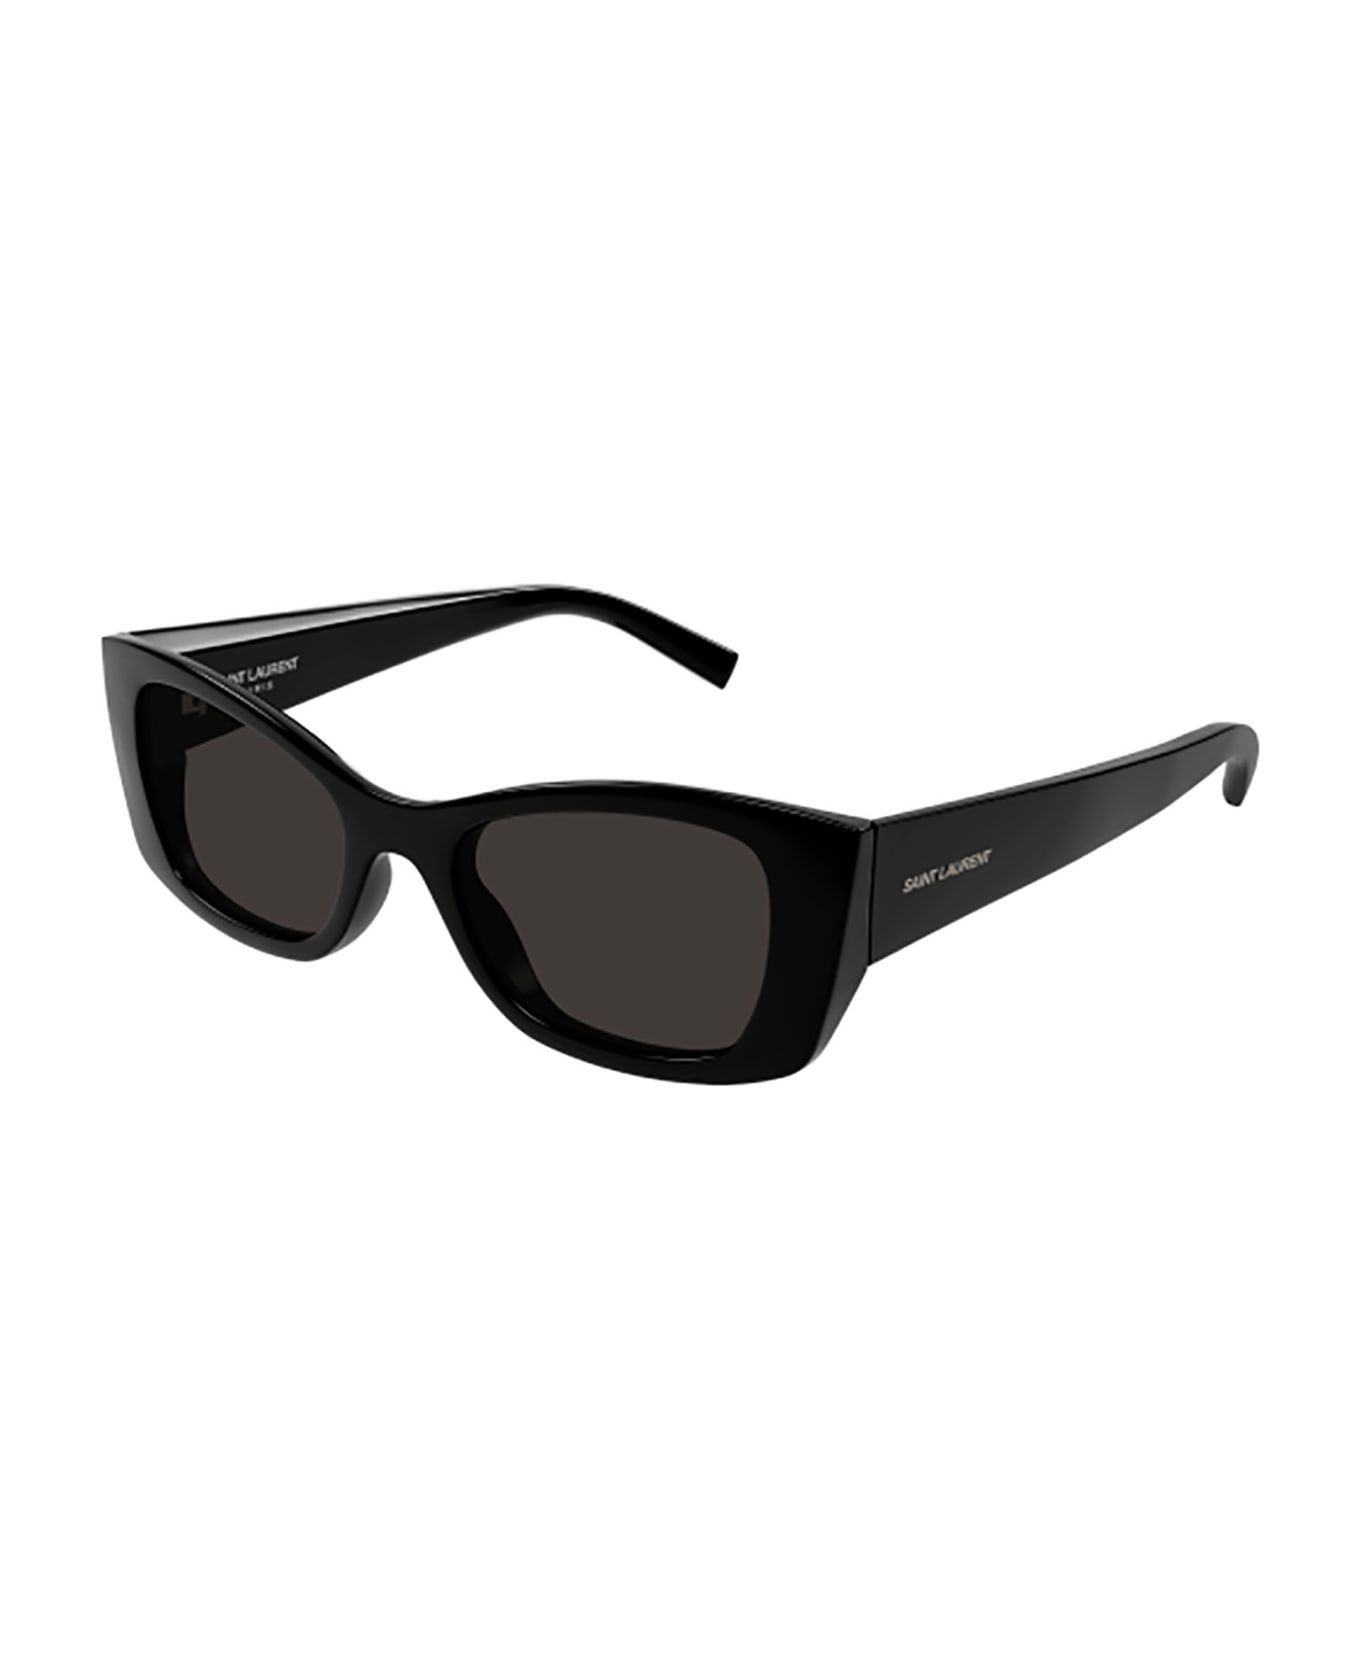 Saint Laurent Eyewear SL 593 Sunglasses - Sunglasses GG1023S 004